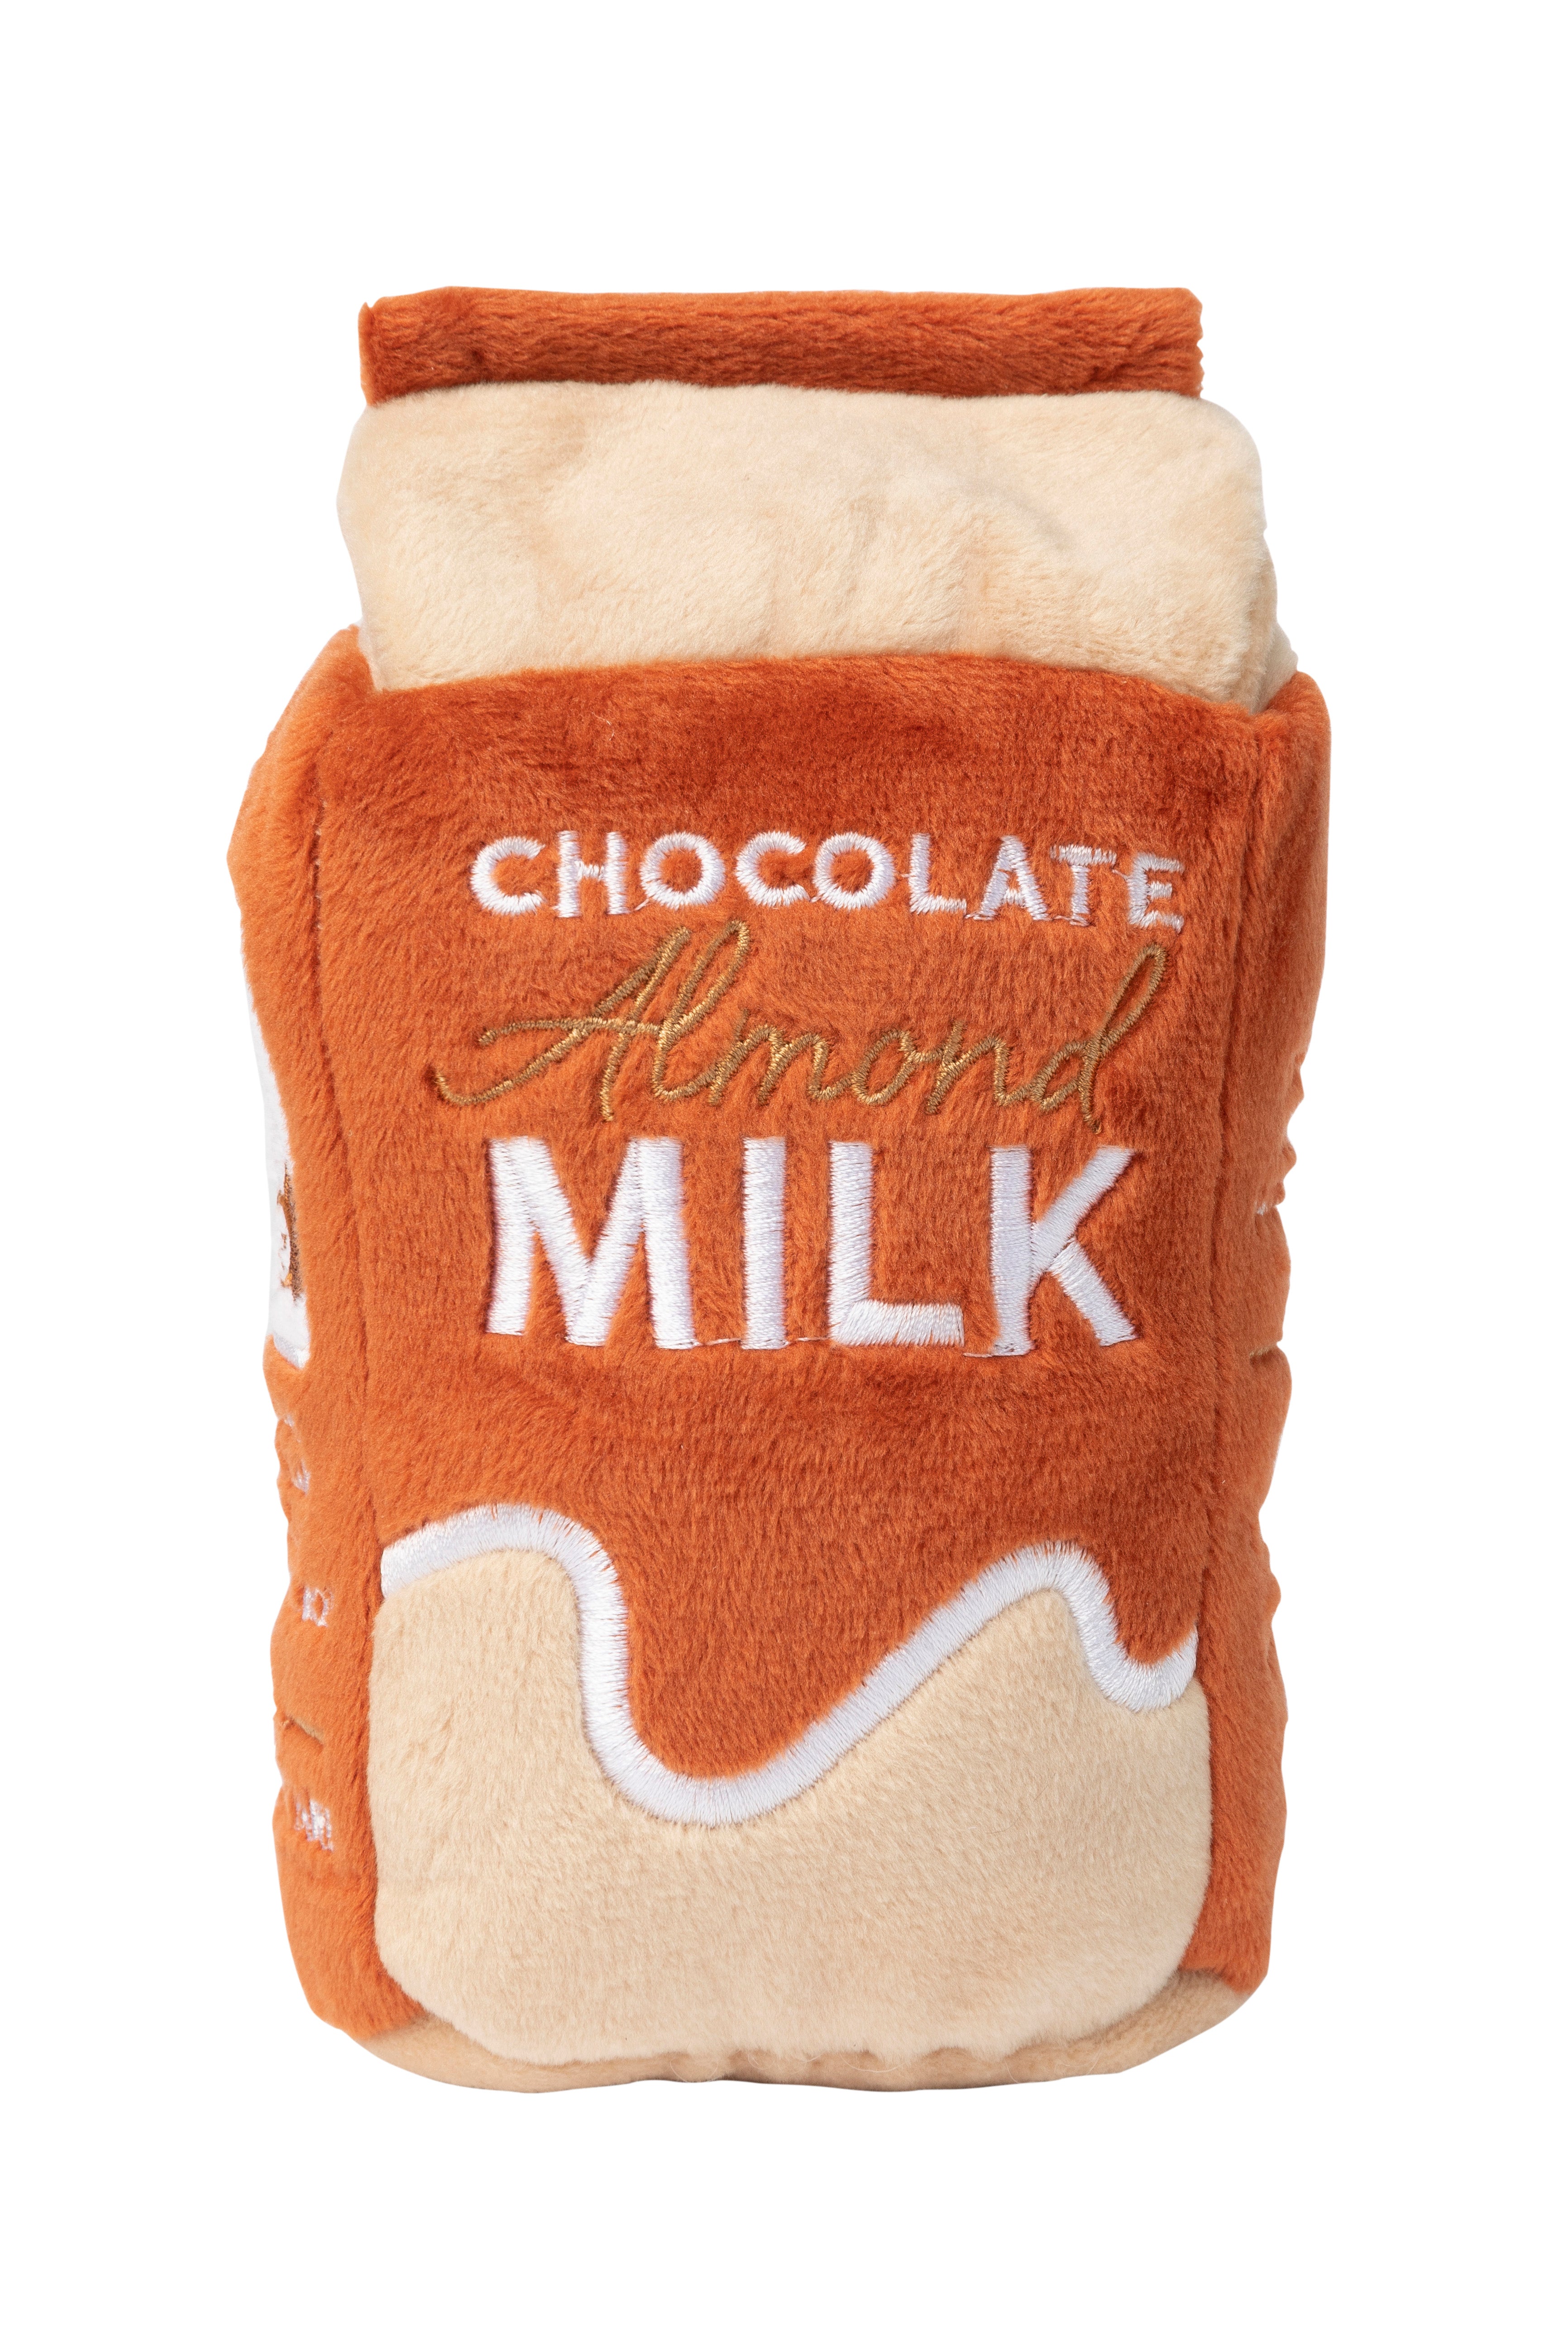 Chocolate Almond Milk Dog Toy